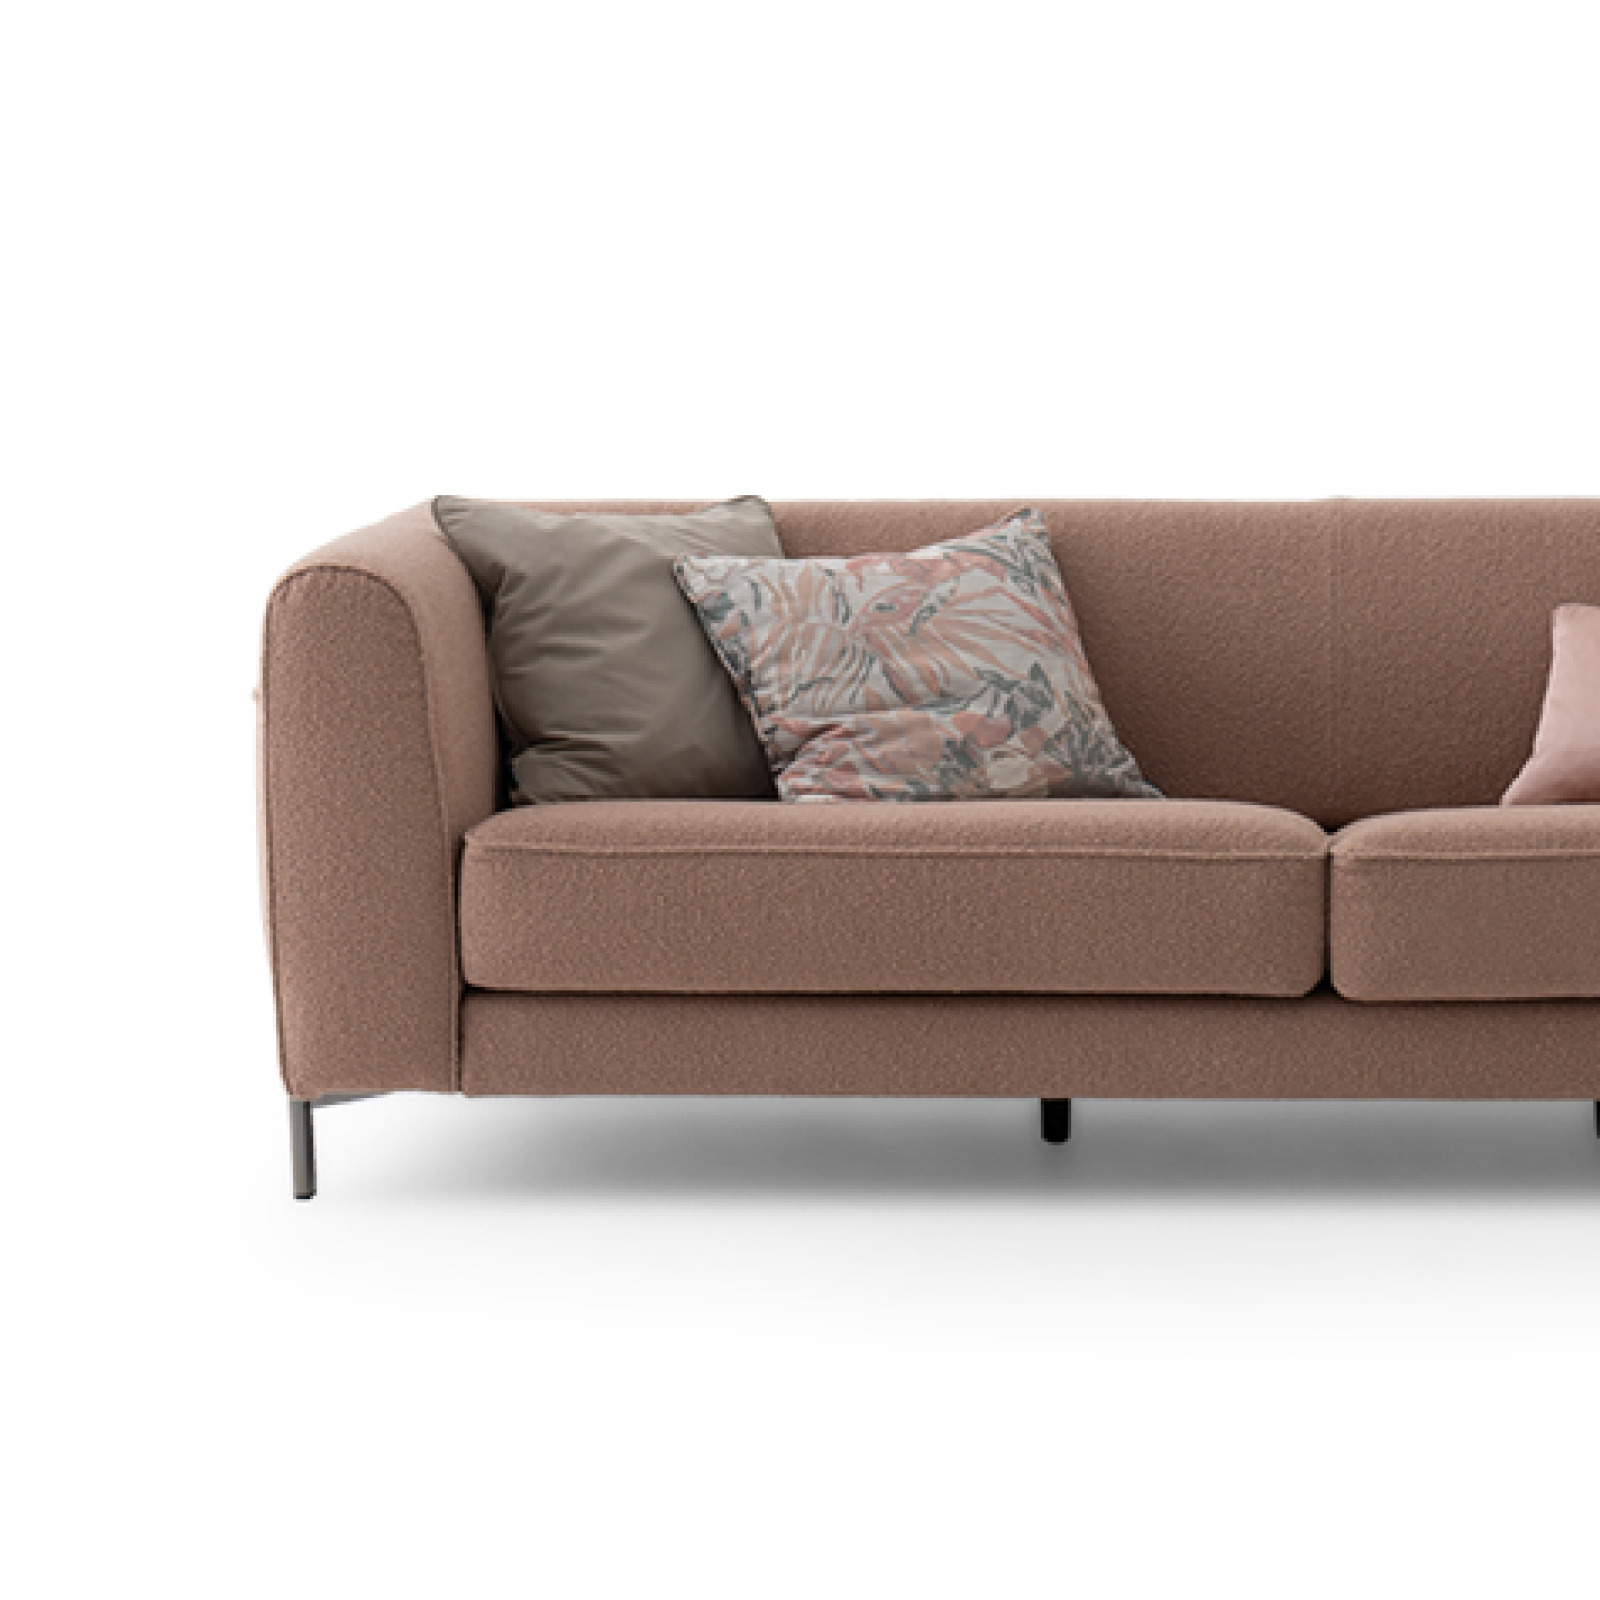 Amour pink ágyazható kanapé